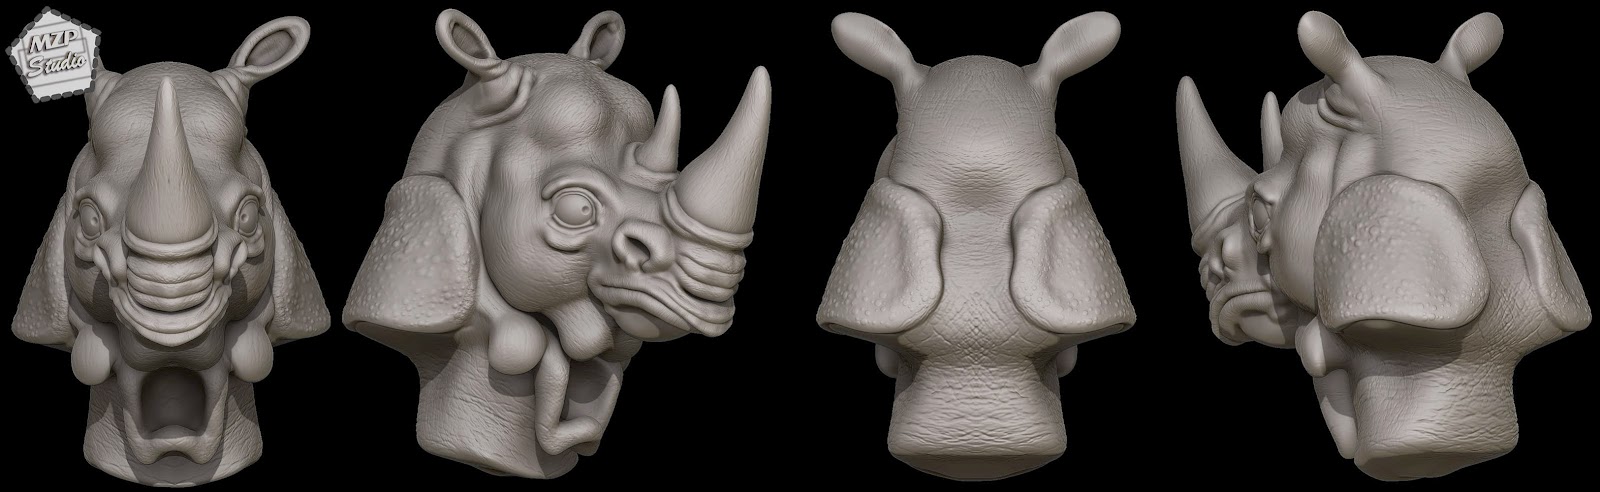 RhinoHeadSculpt.jpg